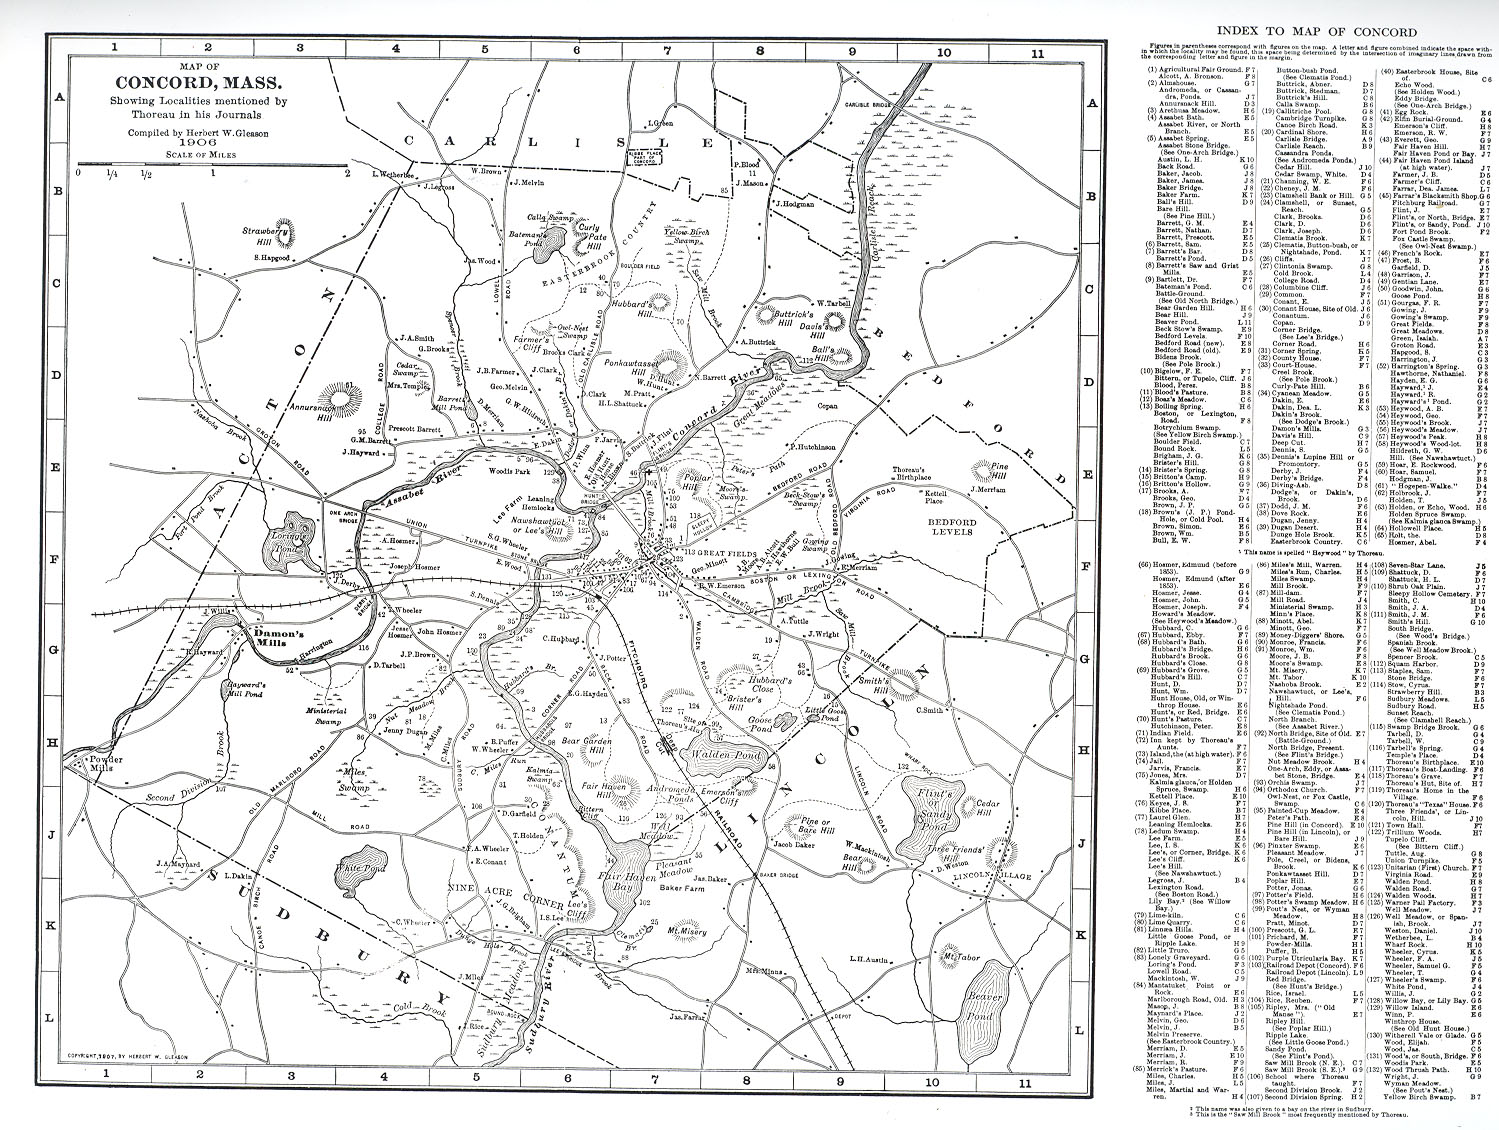 Gleason's 1906 map of Concord, Mass.